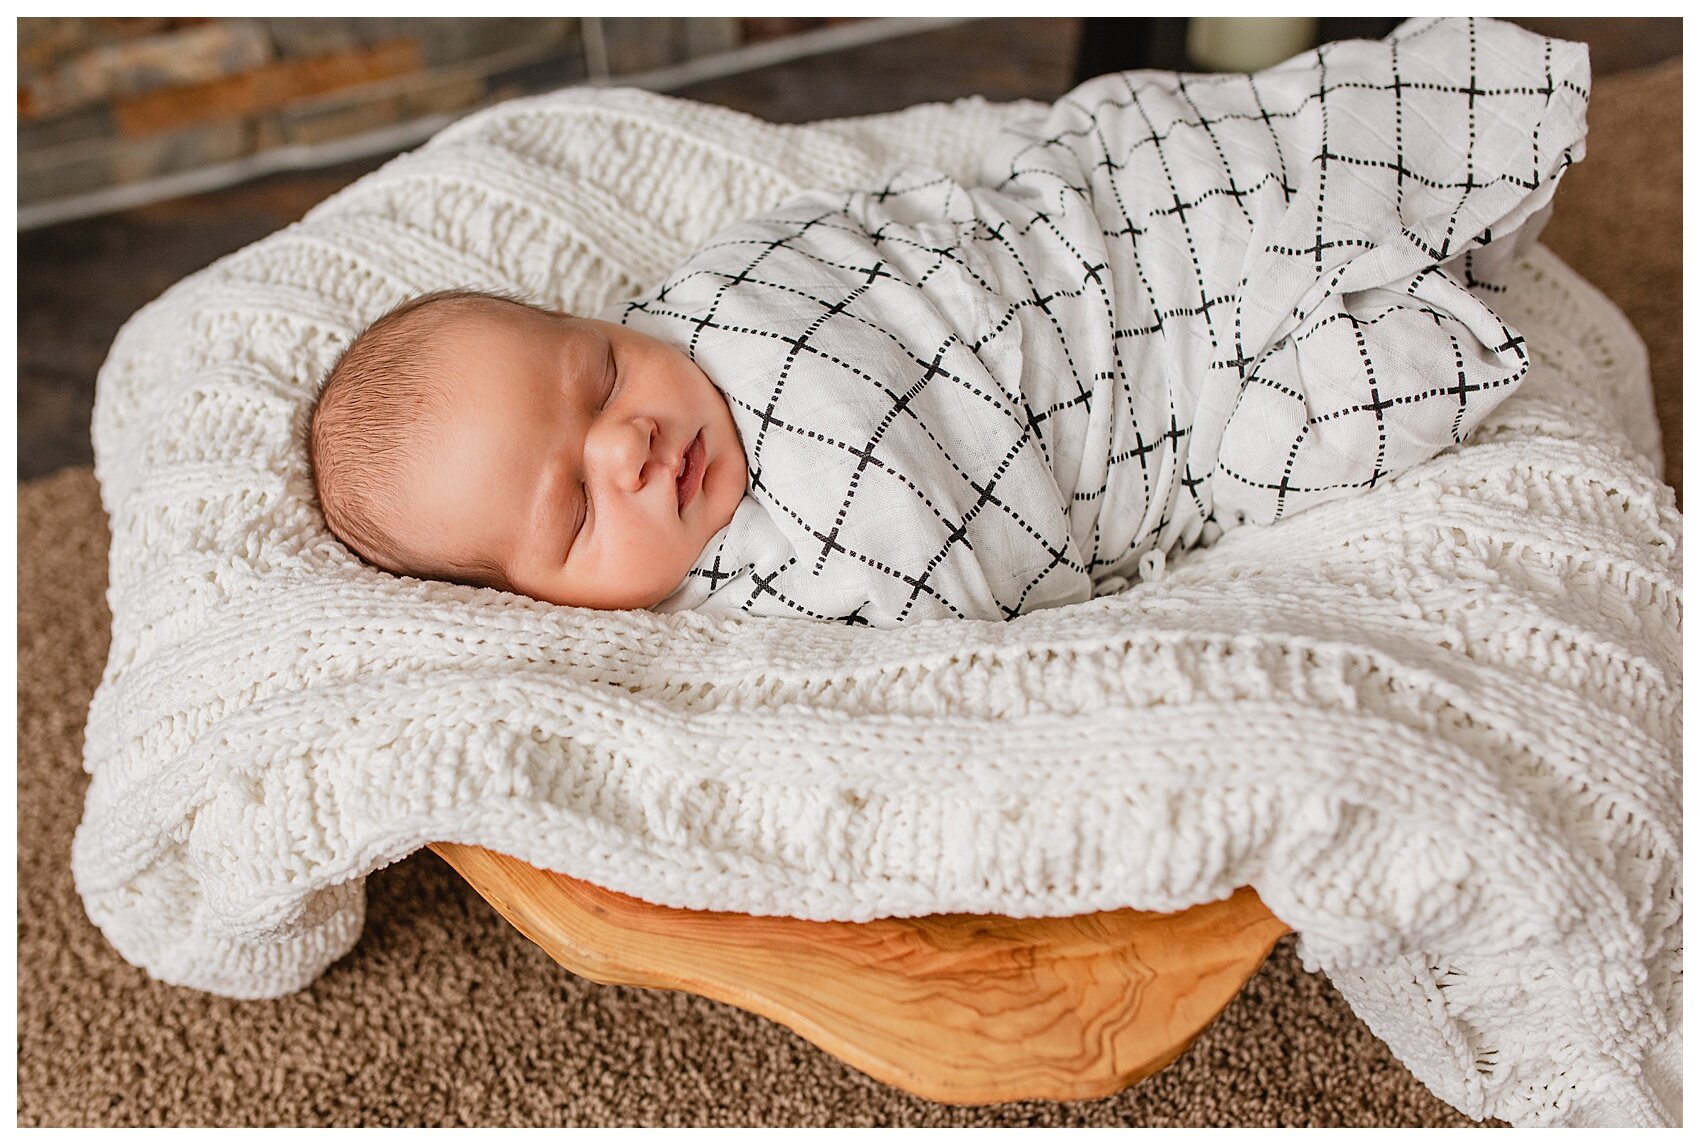 Newborn wooden bowl picture